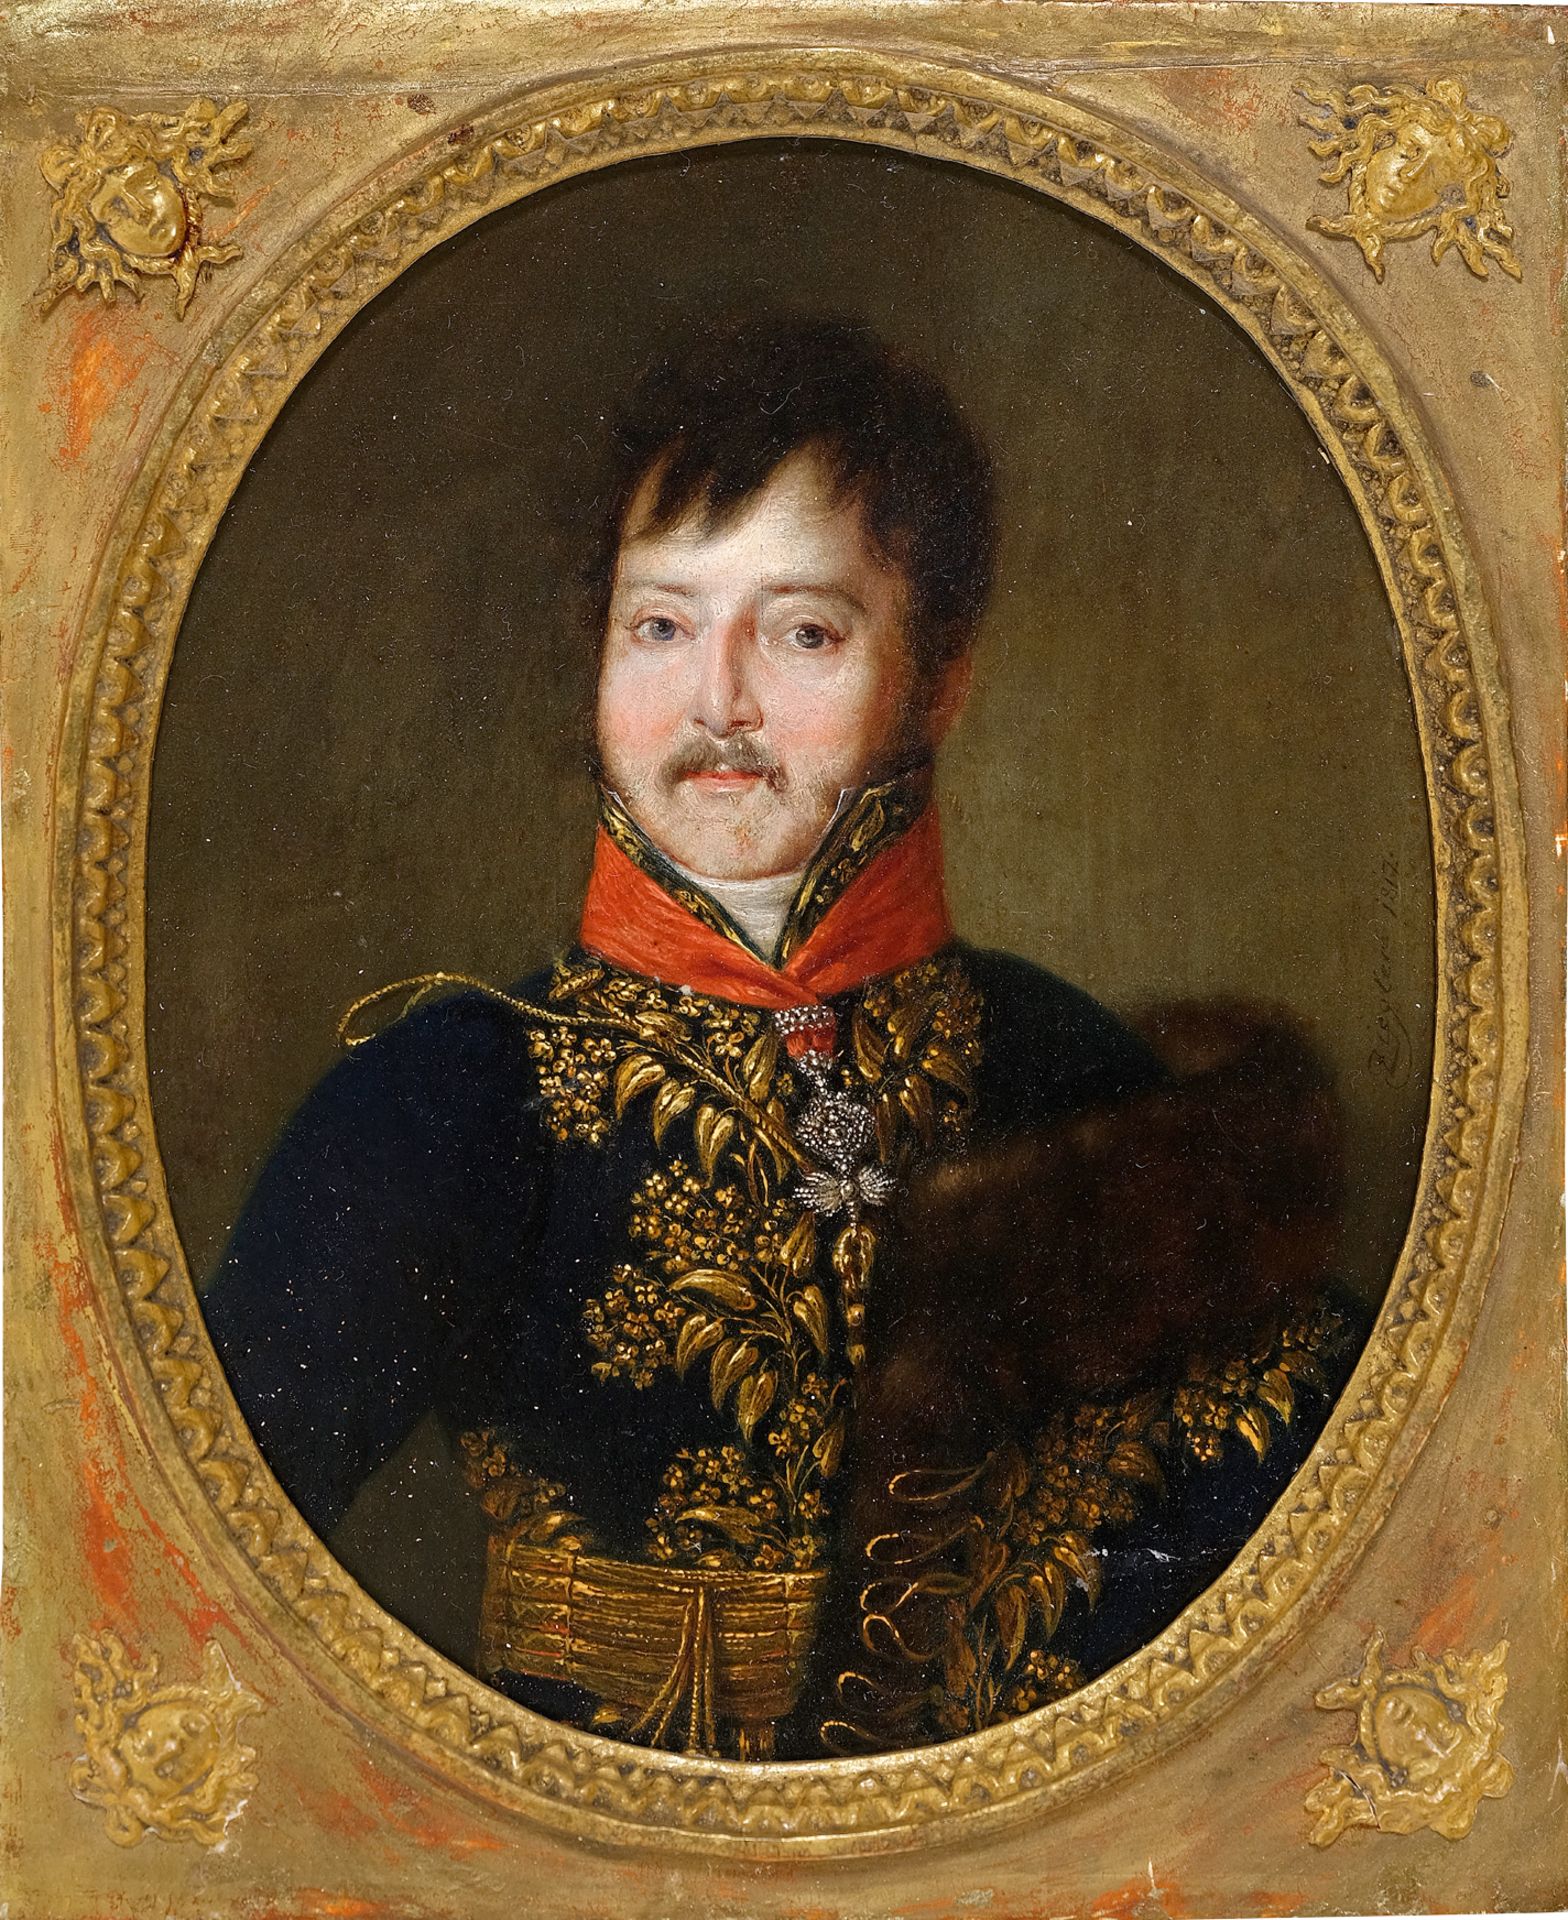 König von Neapel, Gemälde, Empire um 1800 - Image 2 of 3